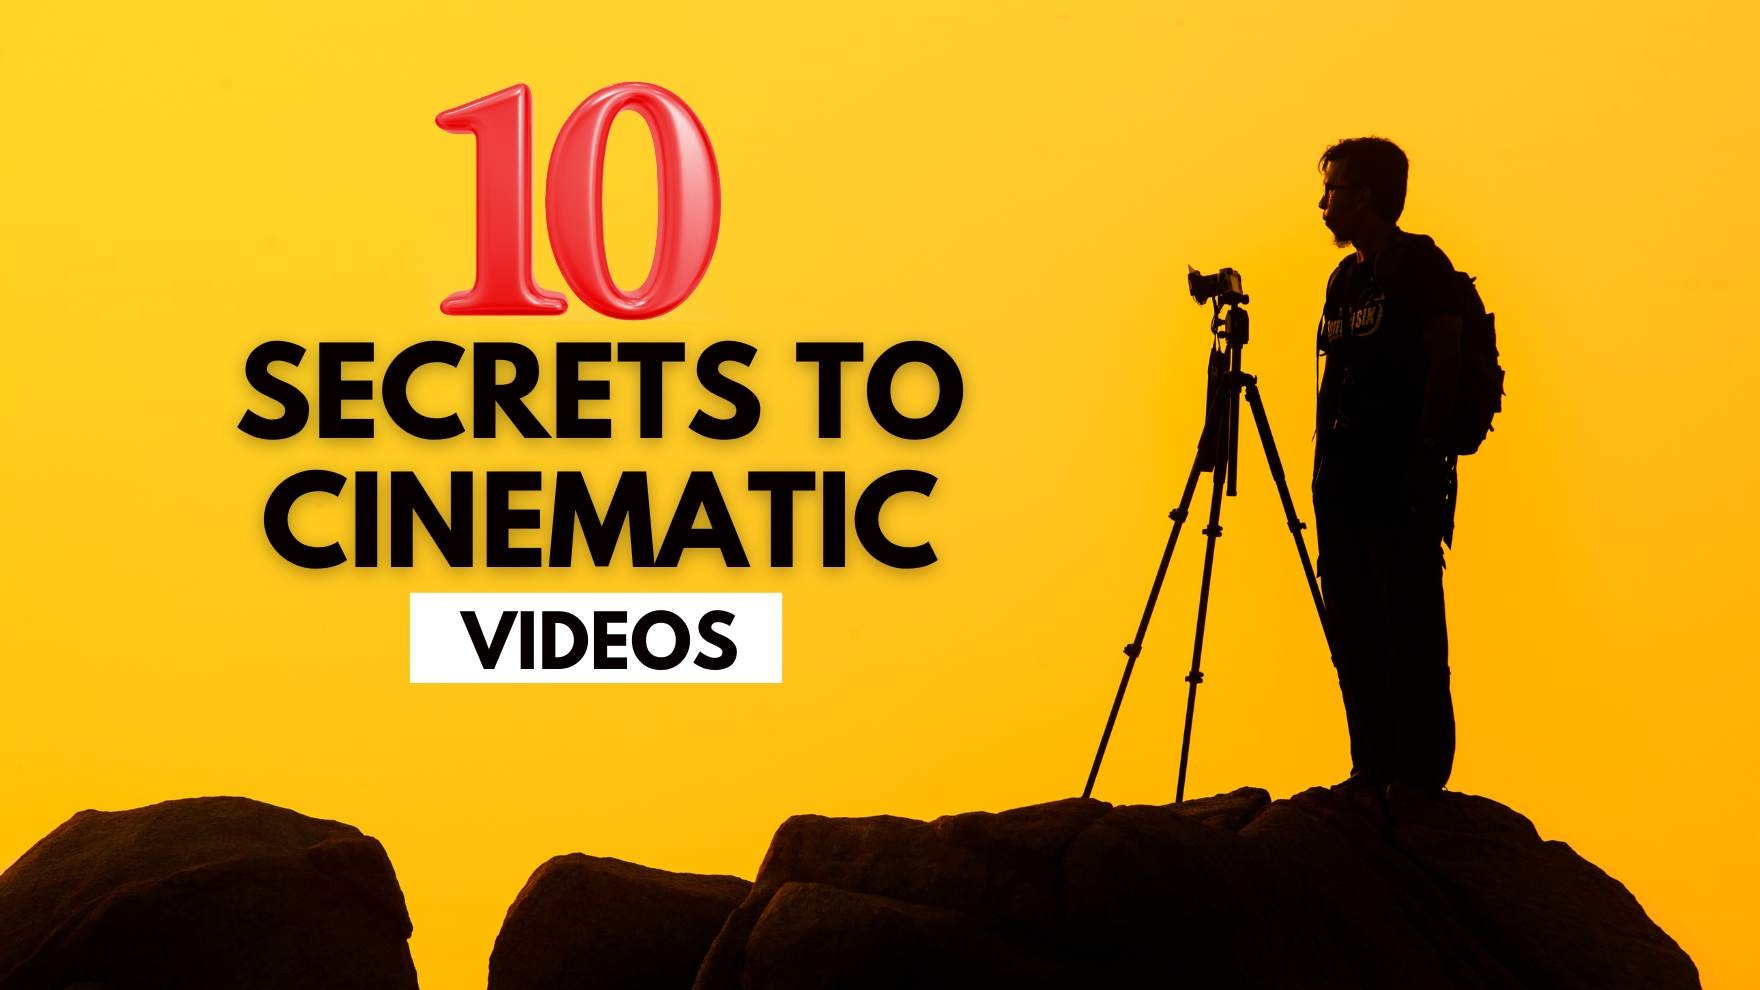 10 Secrets to Cinematic Videos - Workshop